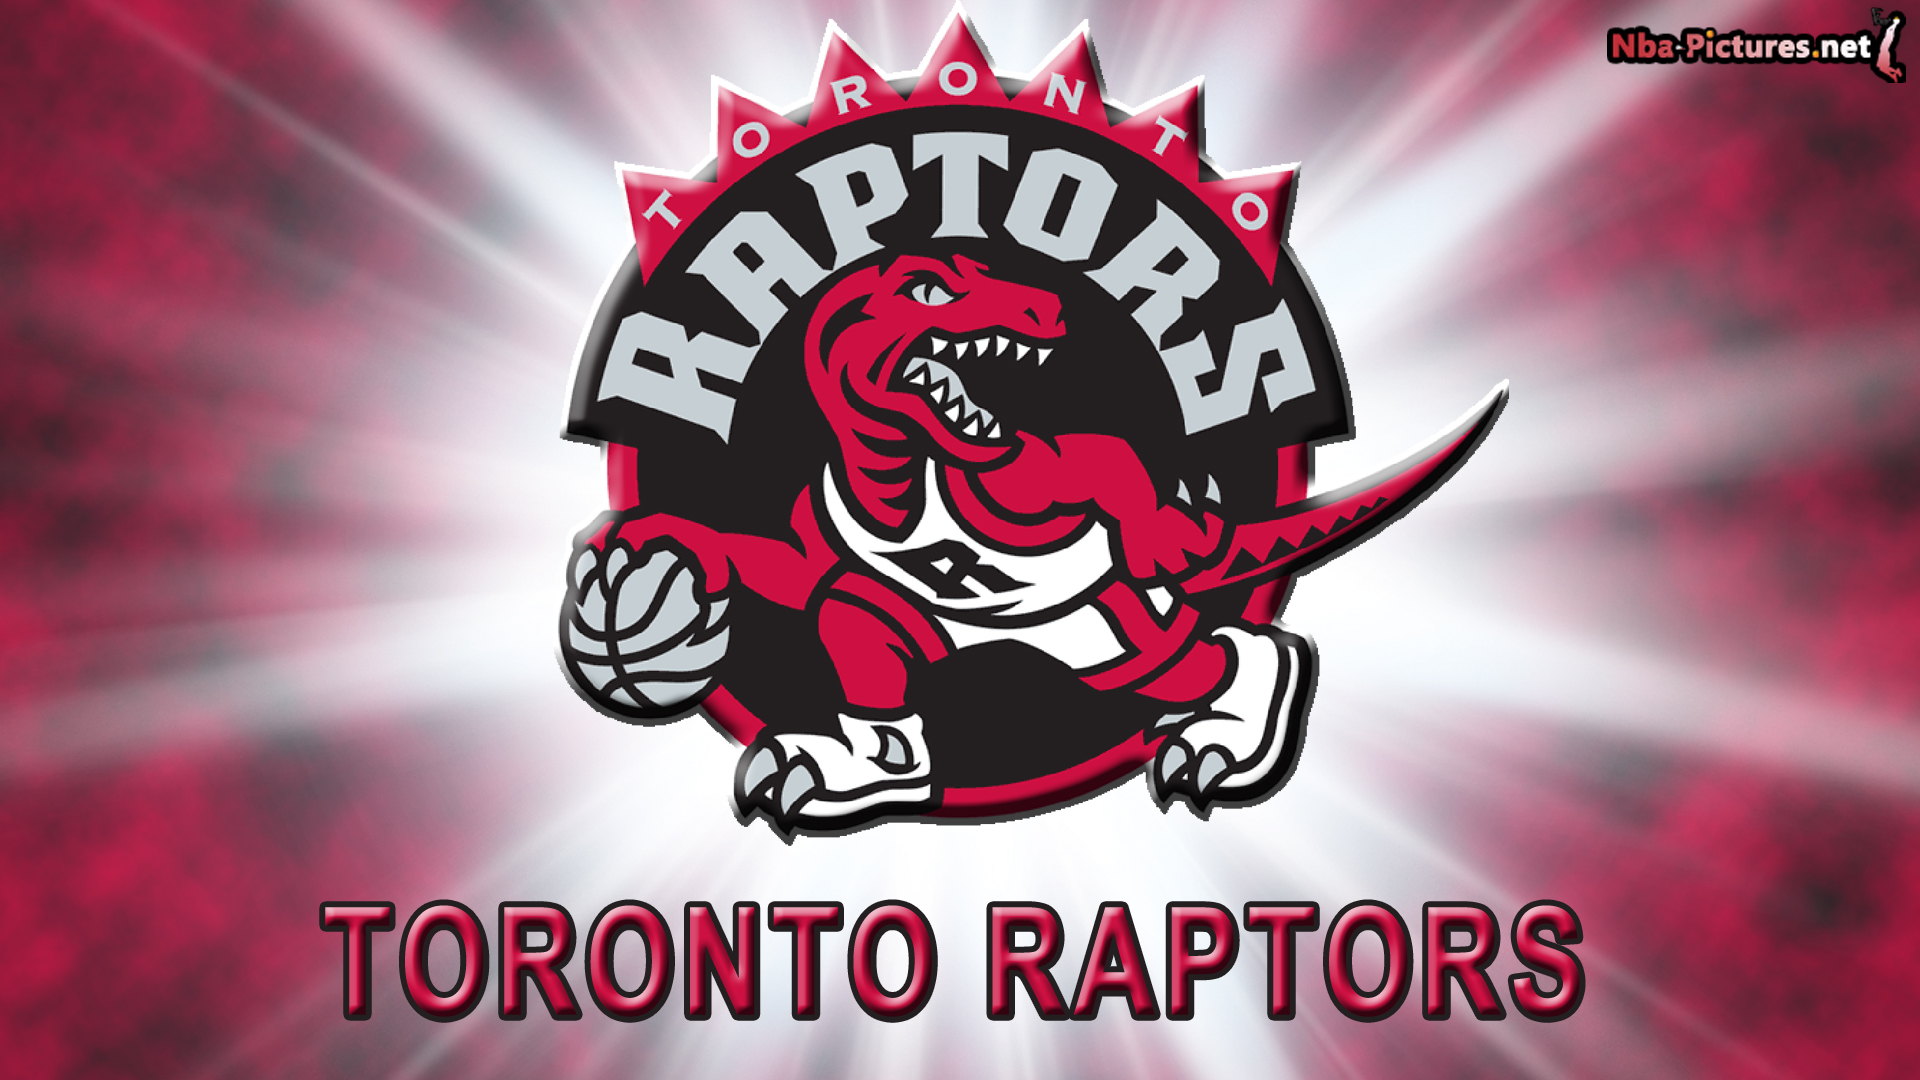 Should The Toronto Raptors Consider A Name Change